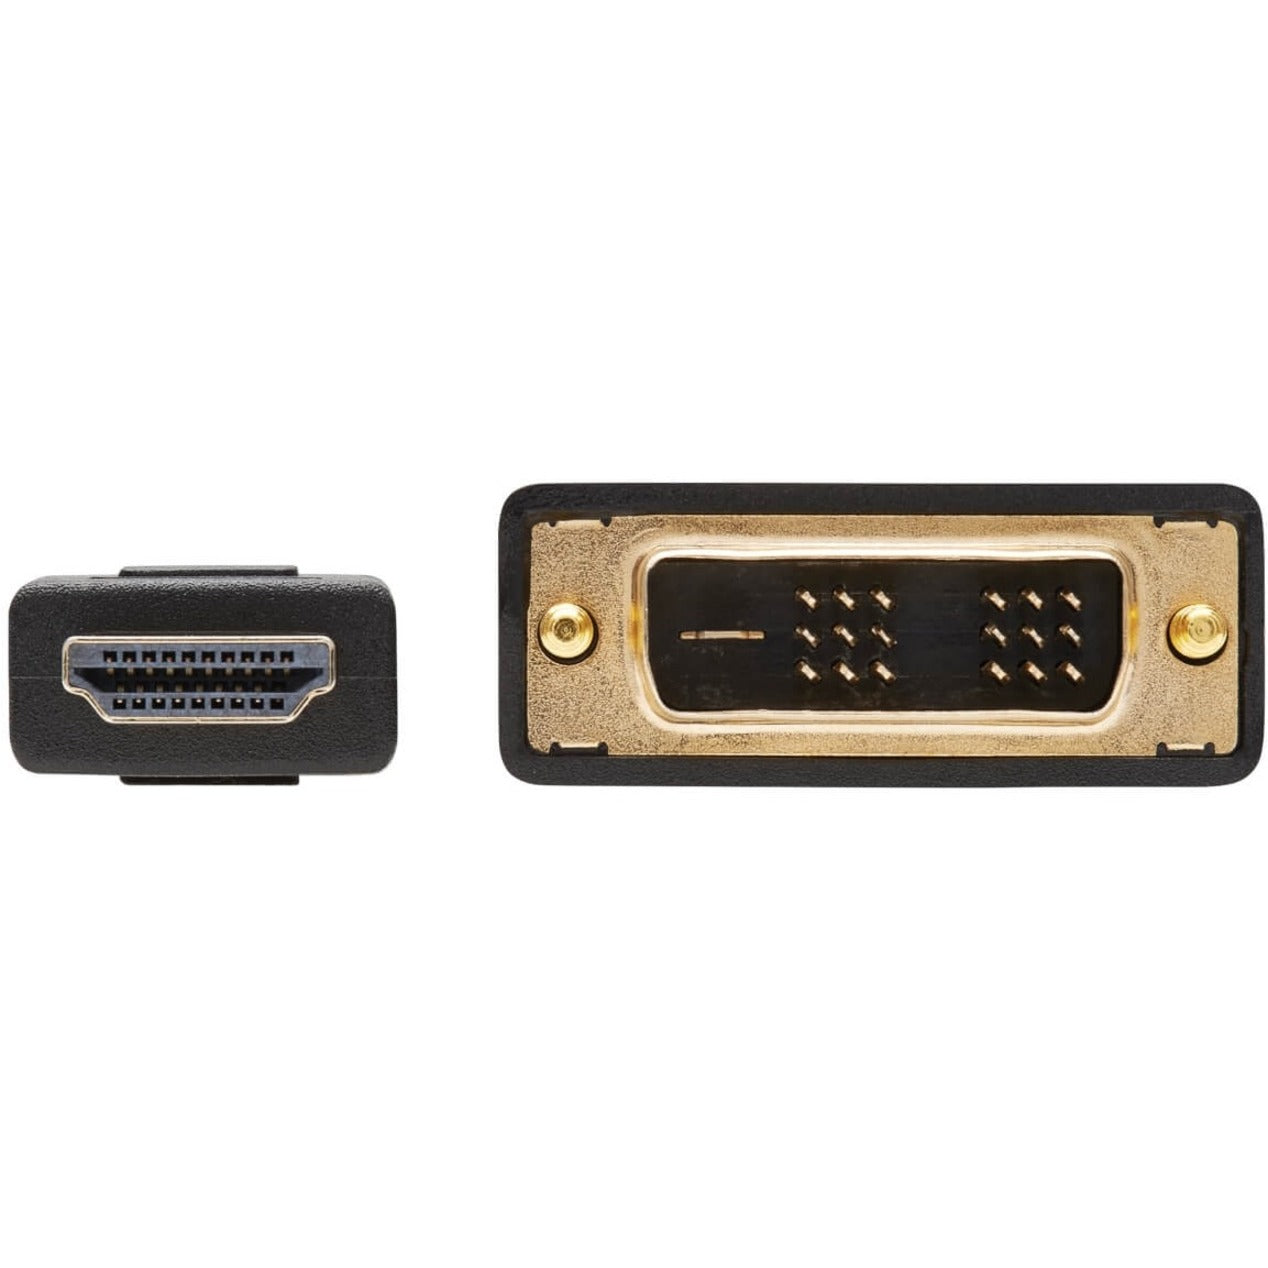 Tripp Lite P566-010 Gold Digital Video Cable, 10 ft HDMI to DVI Male, Copper Conductor